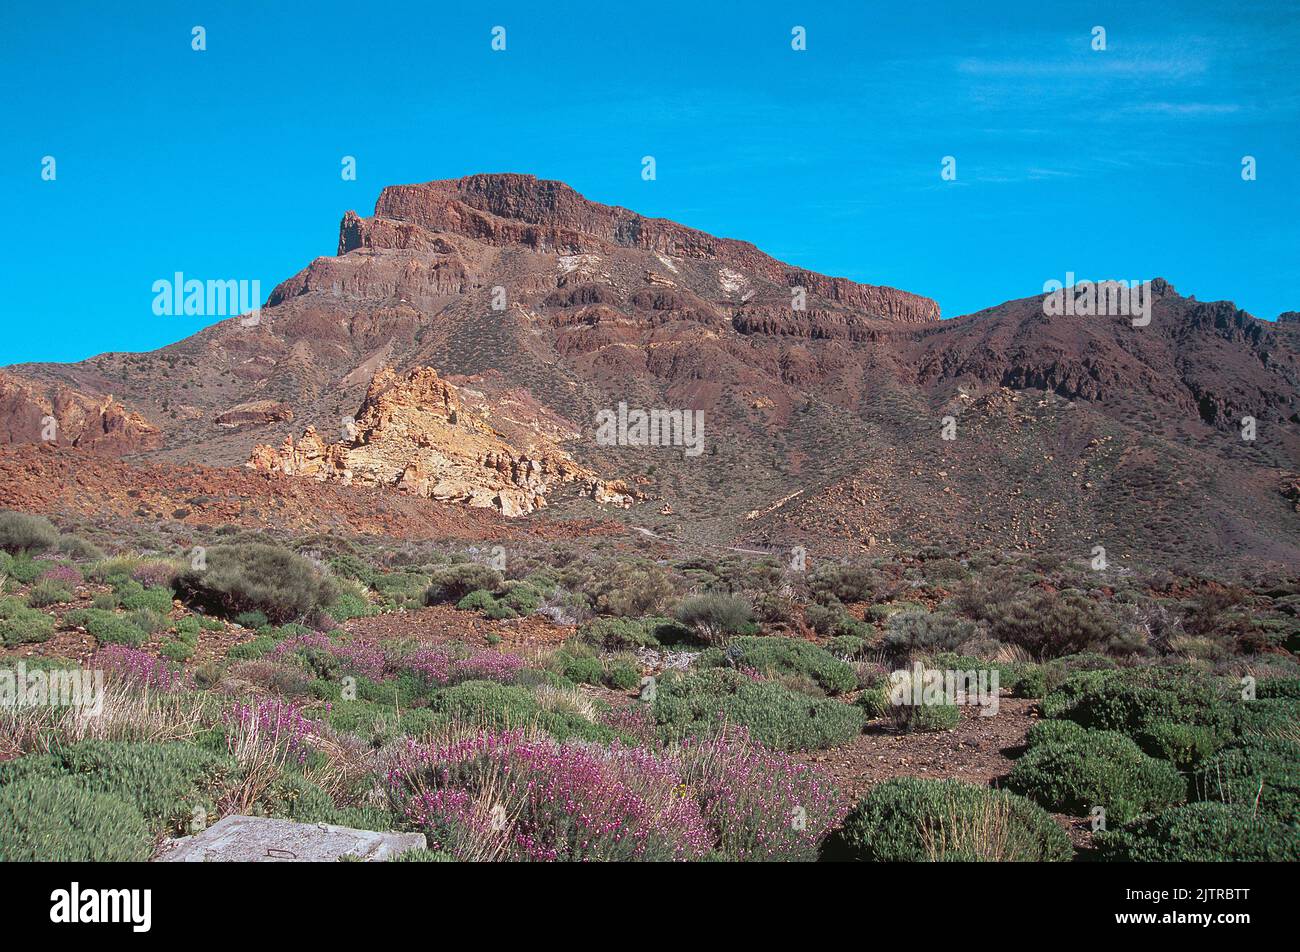 Teide National Park. Tenerife island, Canary Islands, Spain. Stock Photo